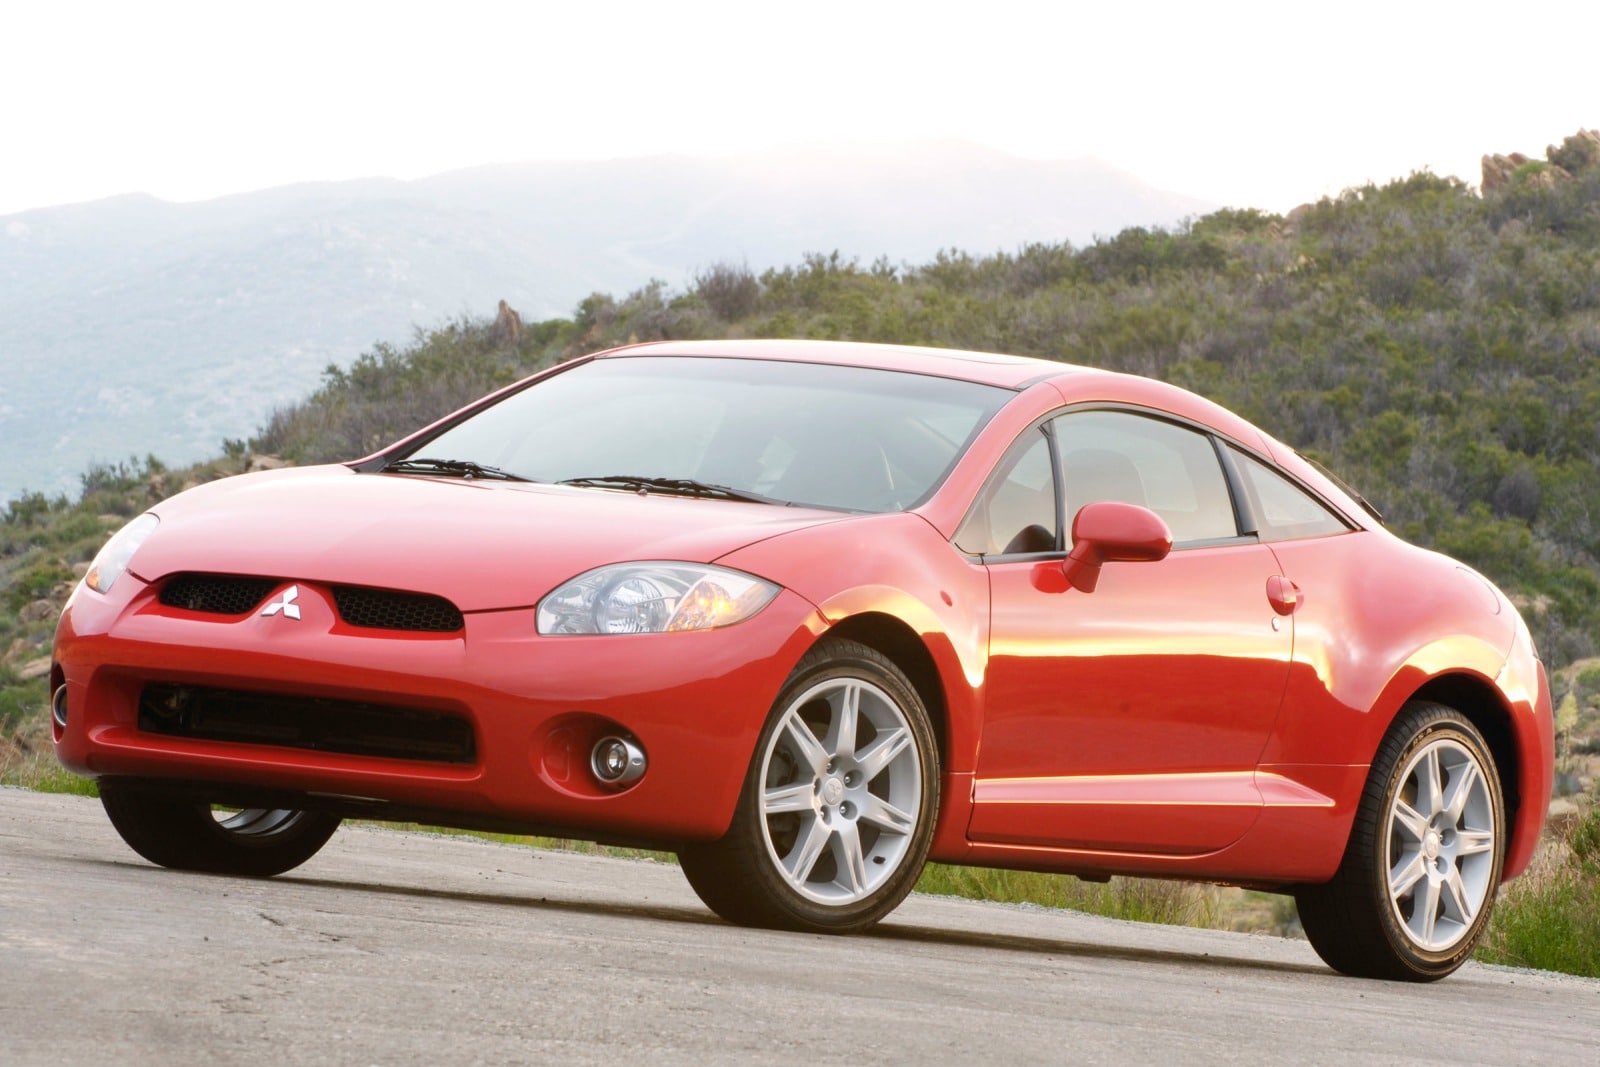 2007 Mitsubishi Eclipse Review & Ratings | Edmunds